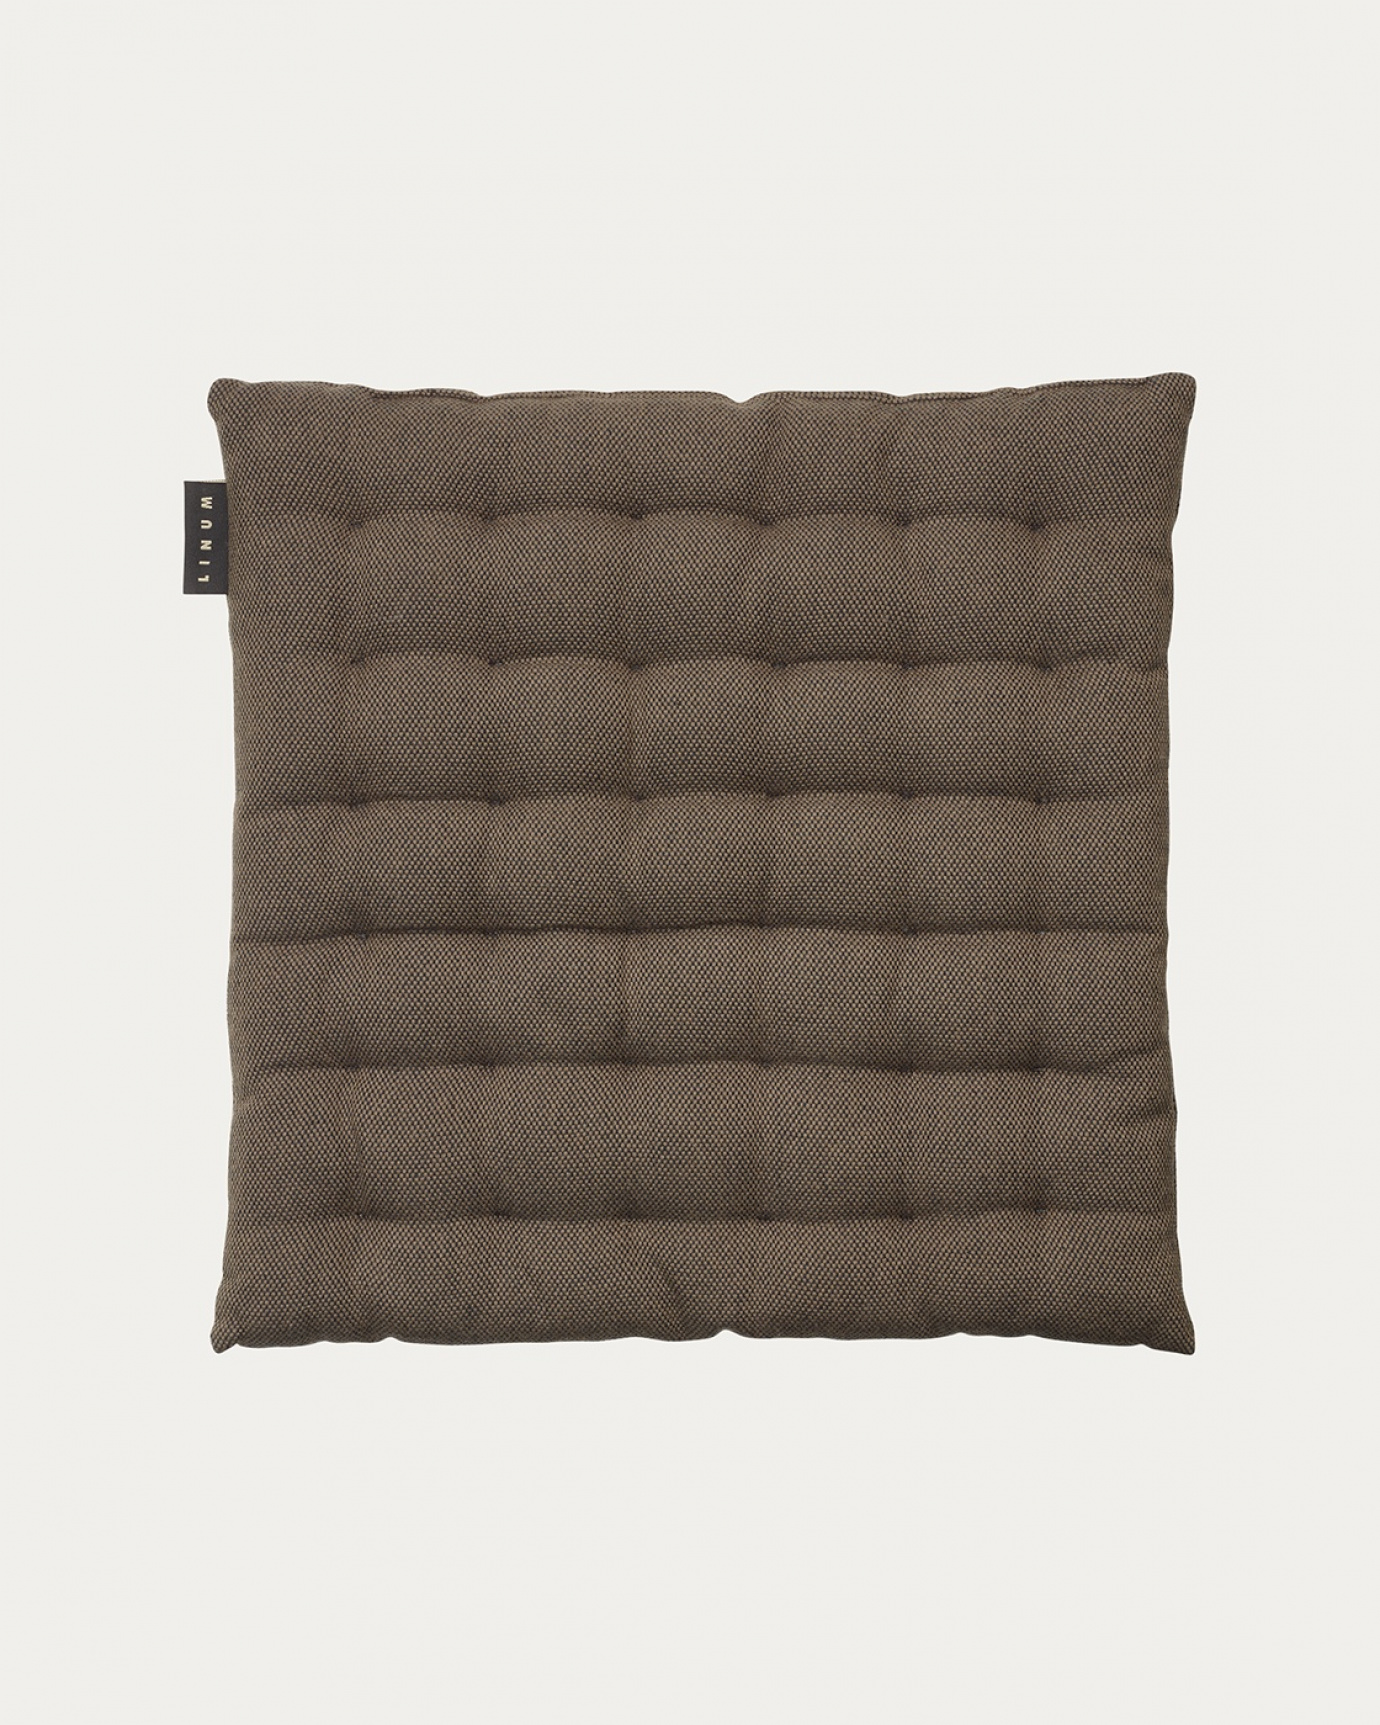 Produktbild björnbrun PEPPER sittdyna av mjuk bomull med återvunnen polyesterfyllning från LINUM DESIGN. Storlek 40x40 cm.